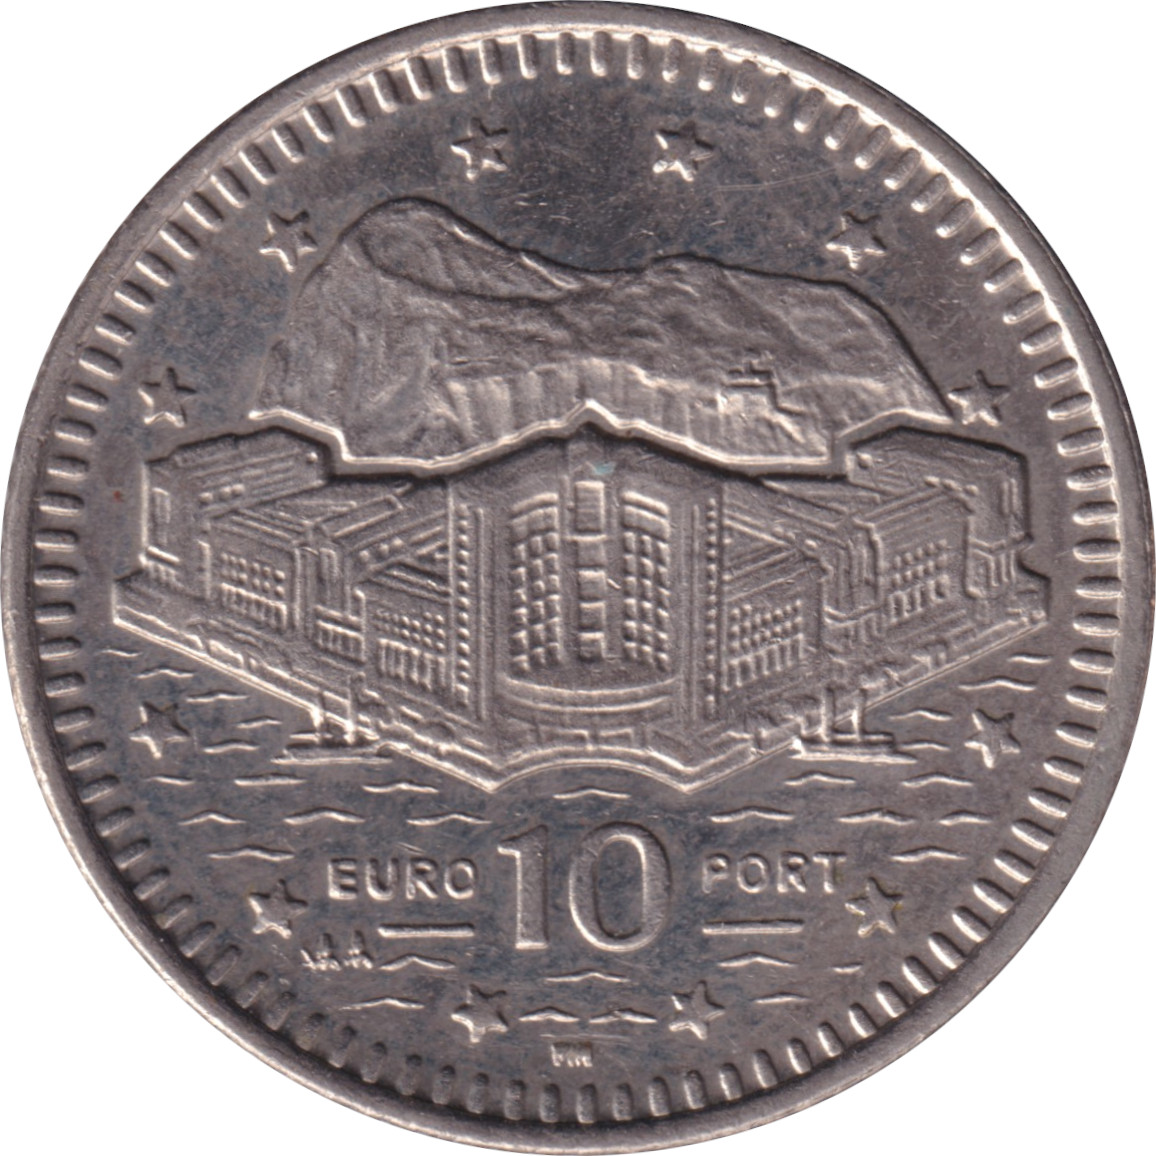 10 pence - Elizabeth II - Old head